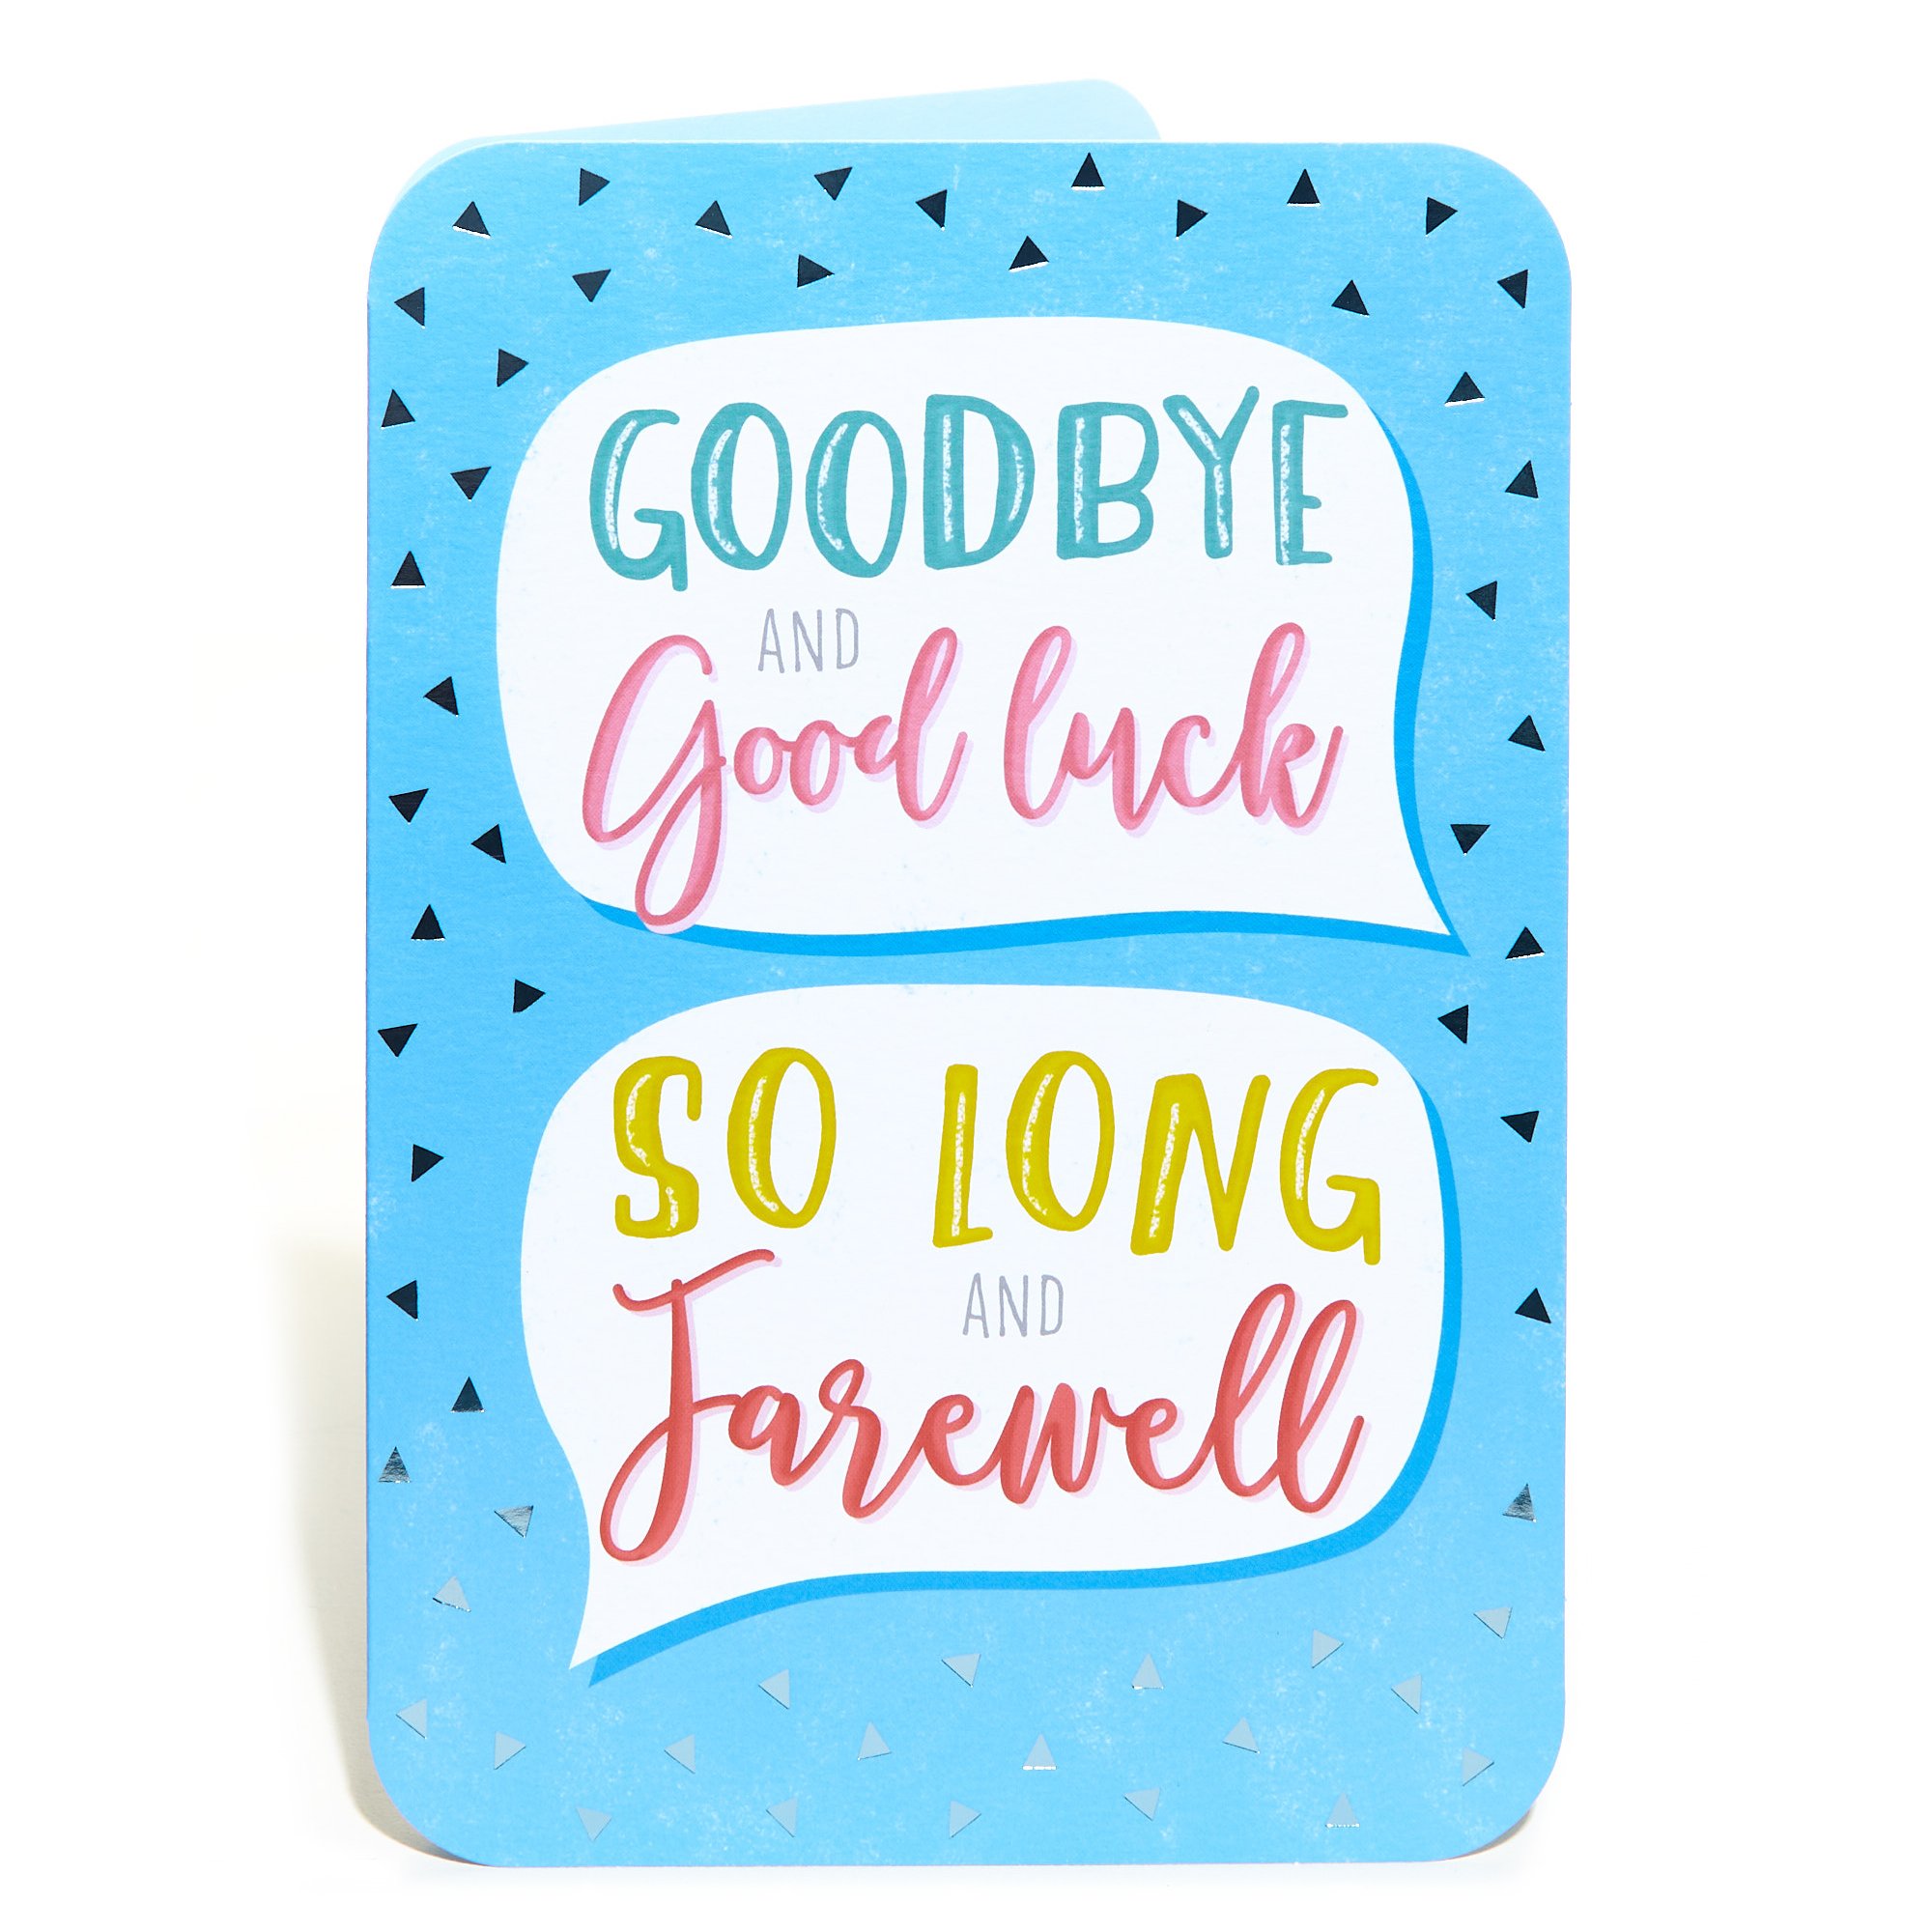 Buy Leaving Card - Goodbye & Good Luck for GBP 0.99 | Card ...